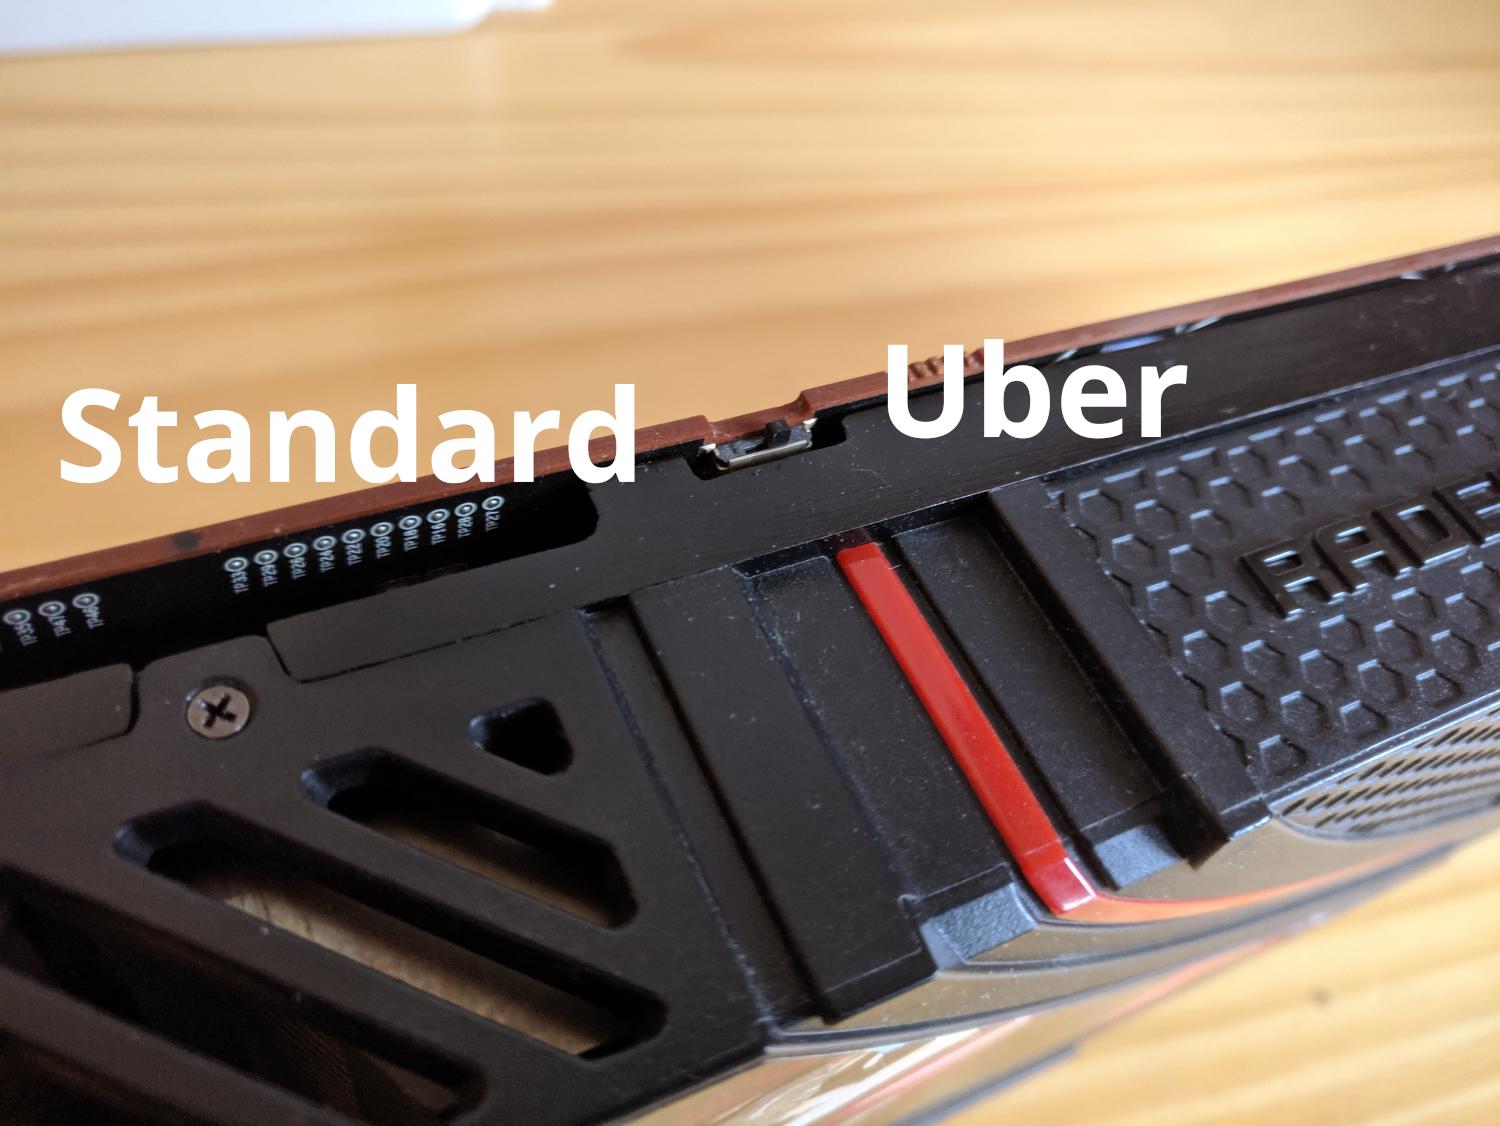 Standard/Uber switch